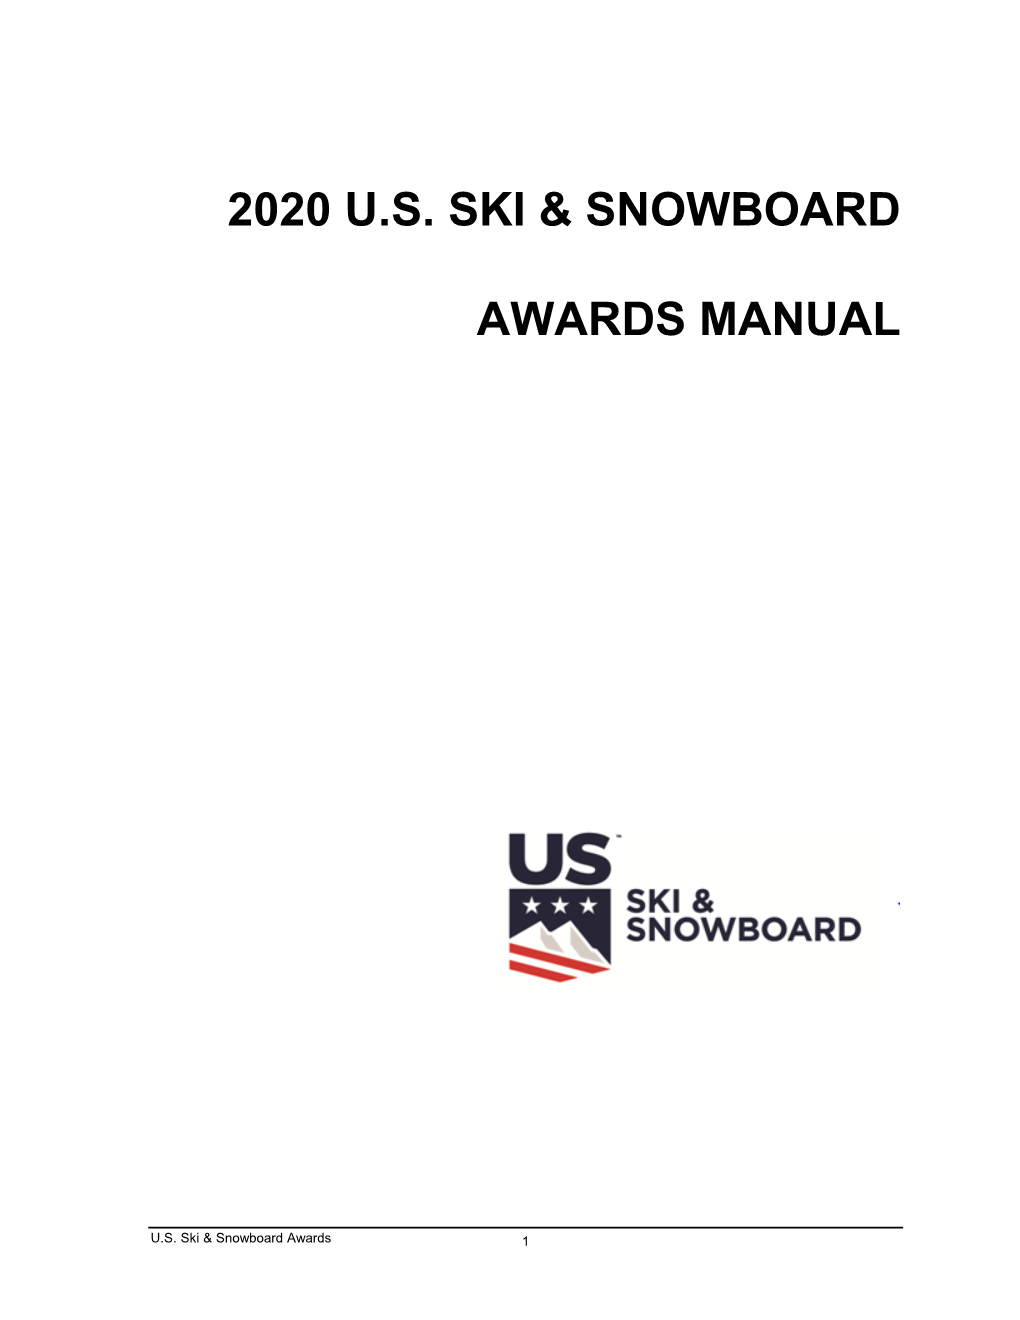 2020 Us Ski & Snowboard Awards Manual